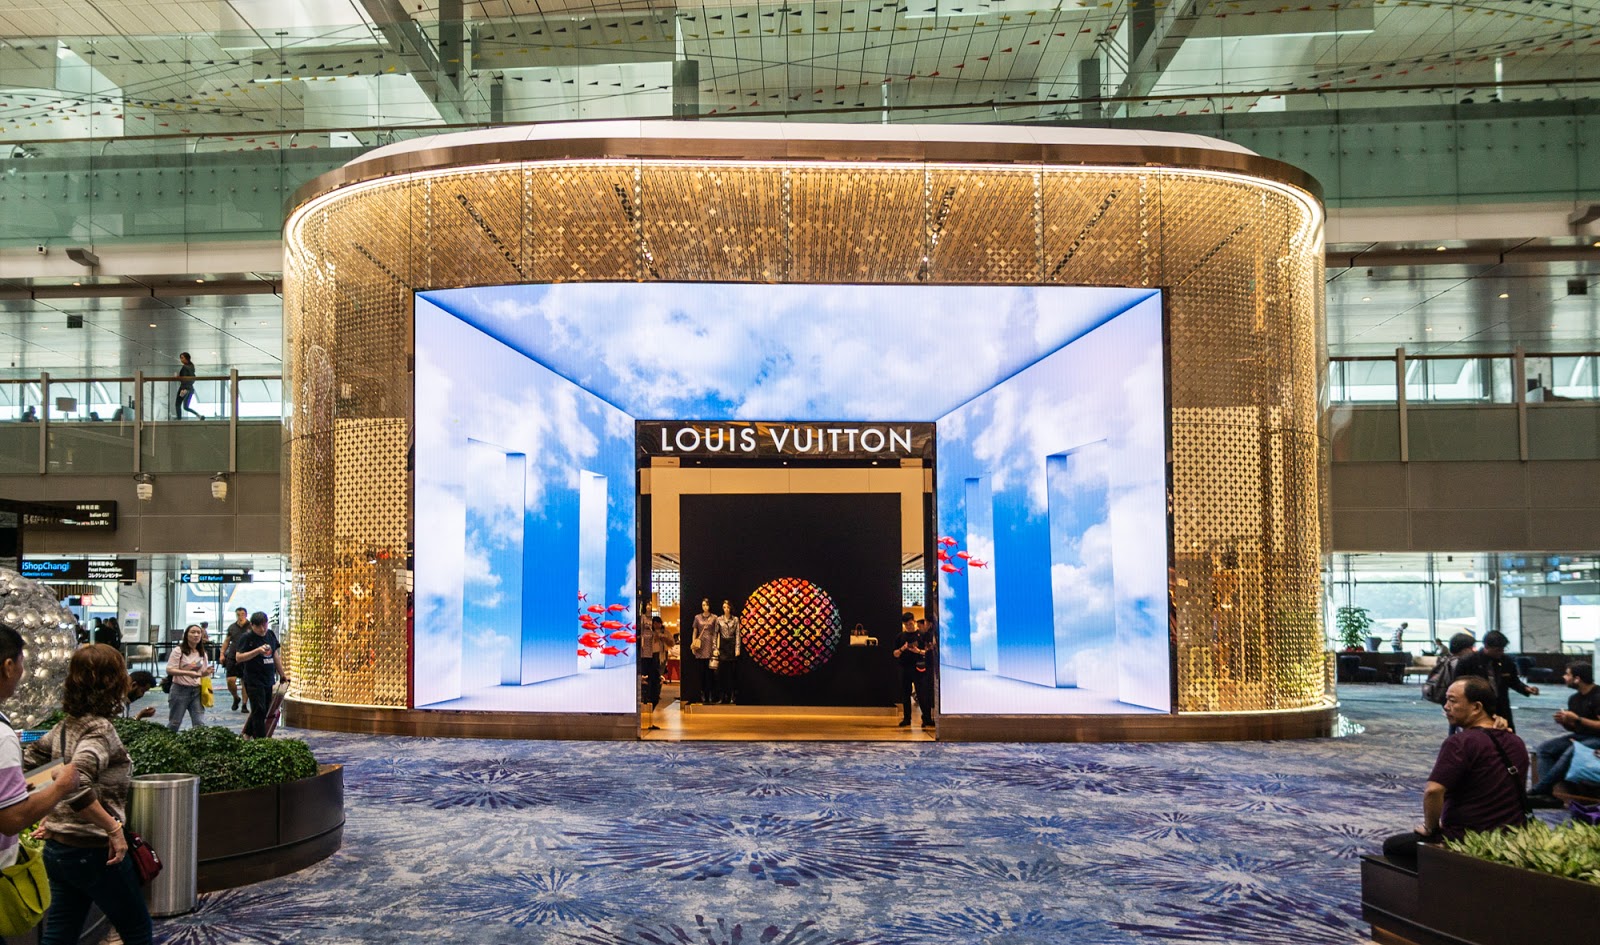 Louis Vuitton  Singapore Changi airport 